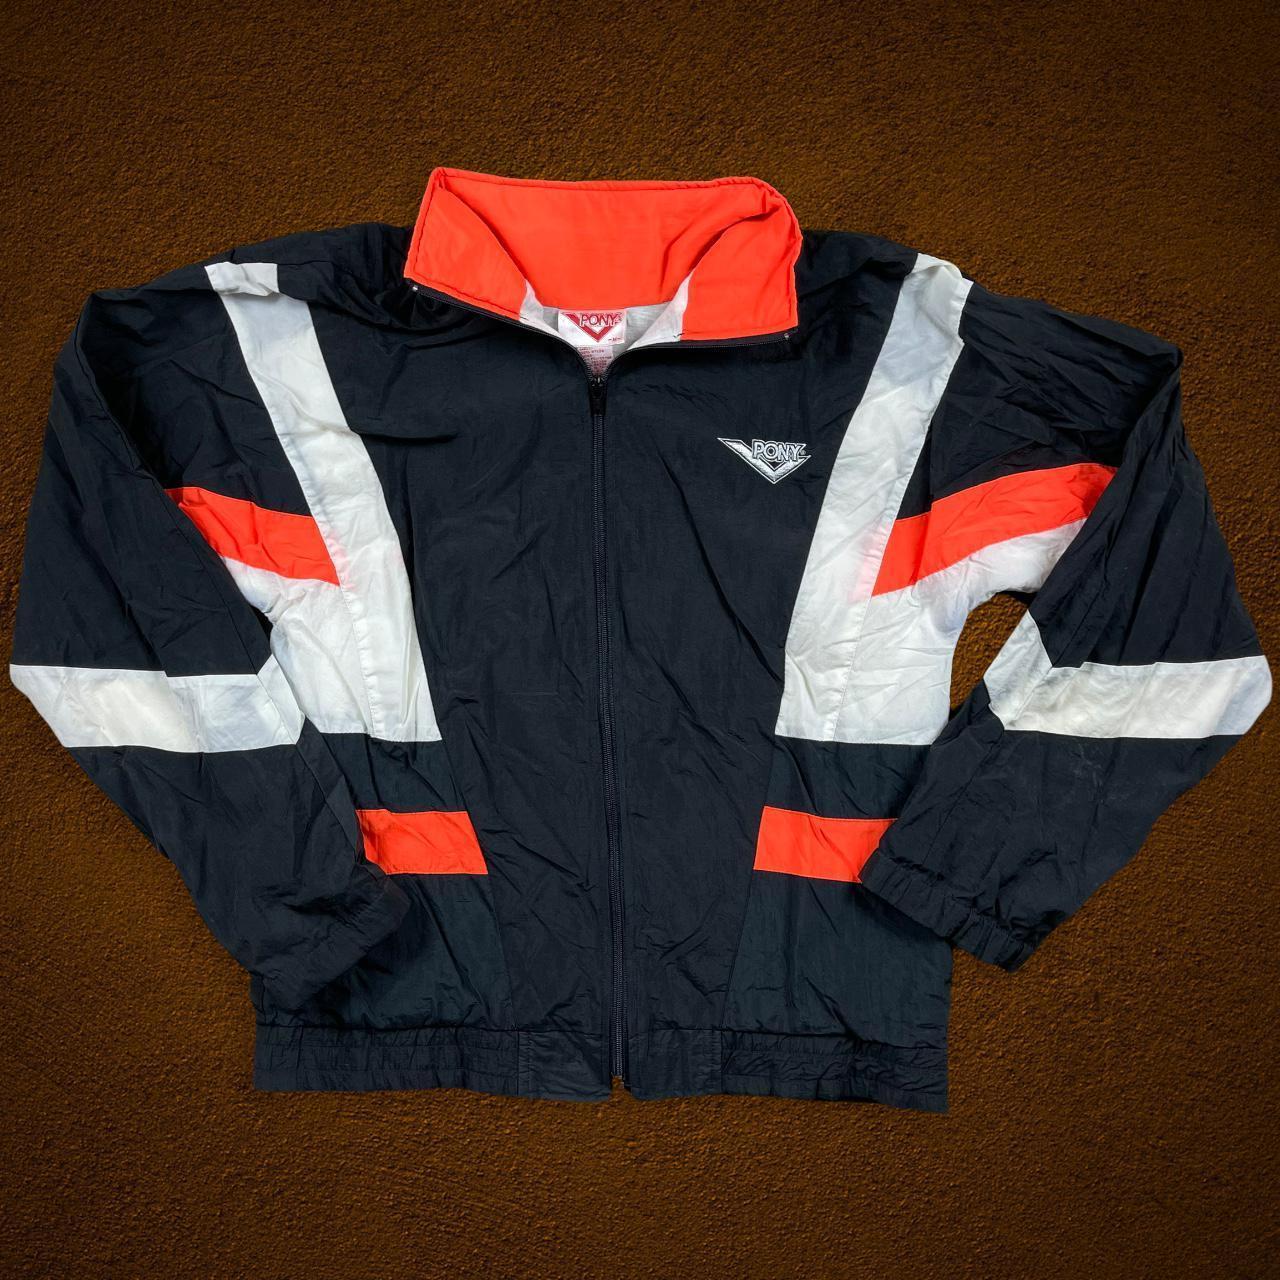 Product Image 1 - Vintage pony brand windbreaker jacket